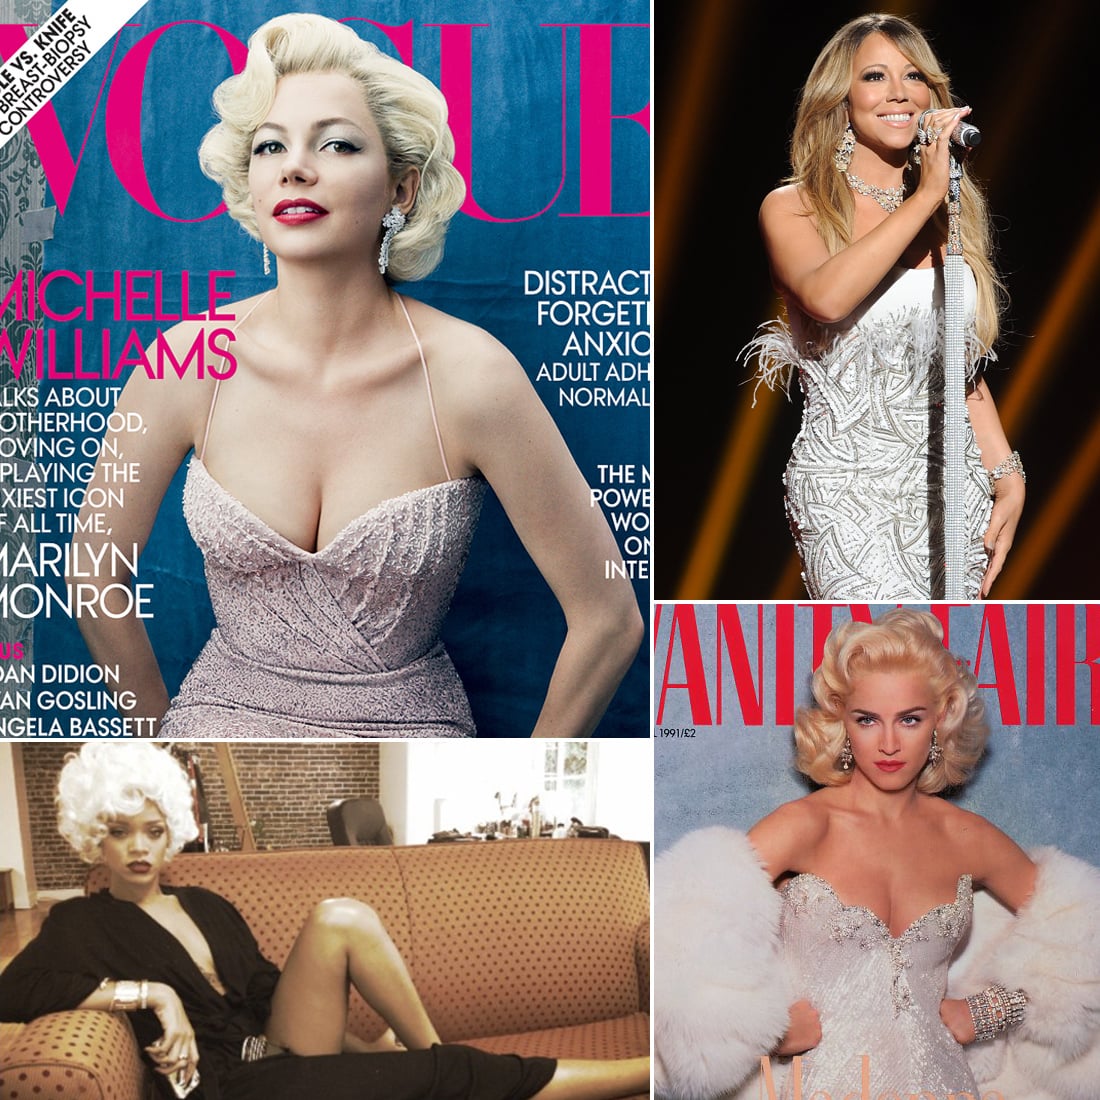 Celebrities Inspired by Marilyn Monroe